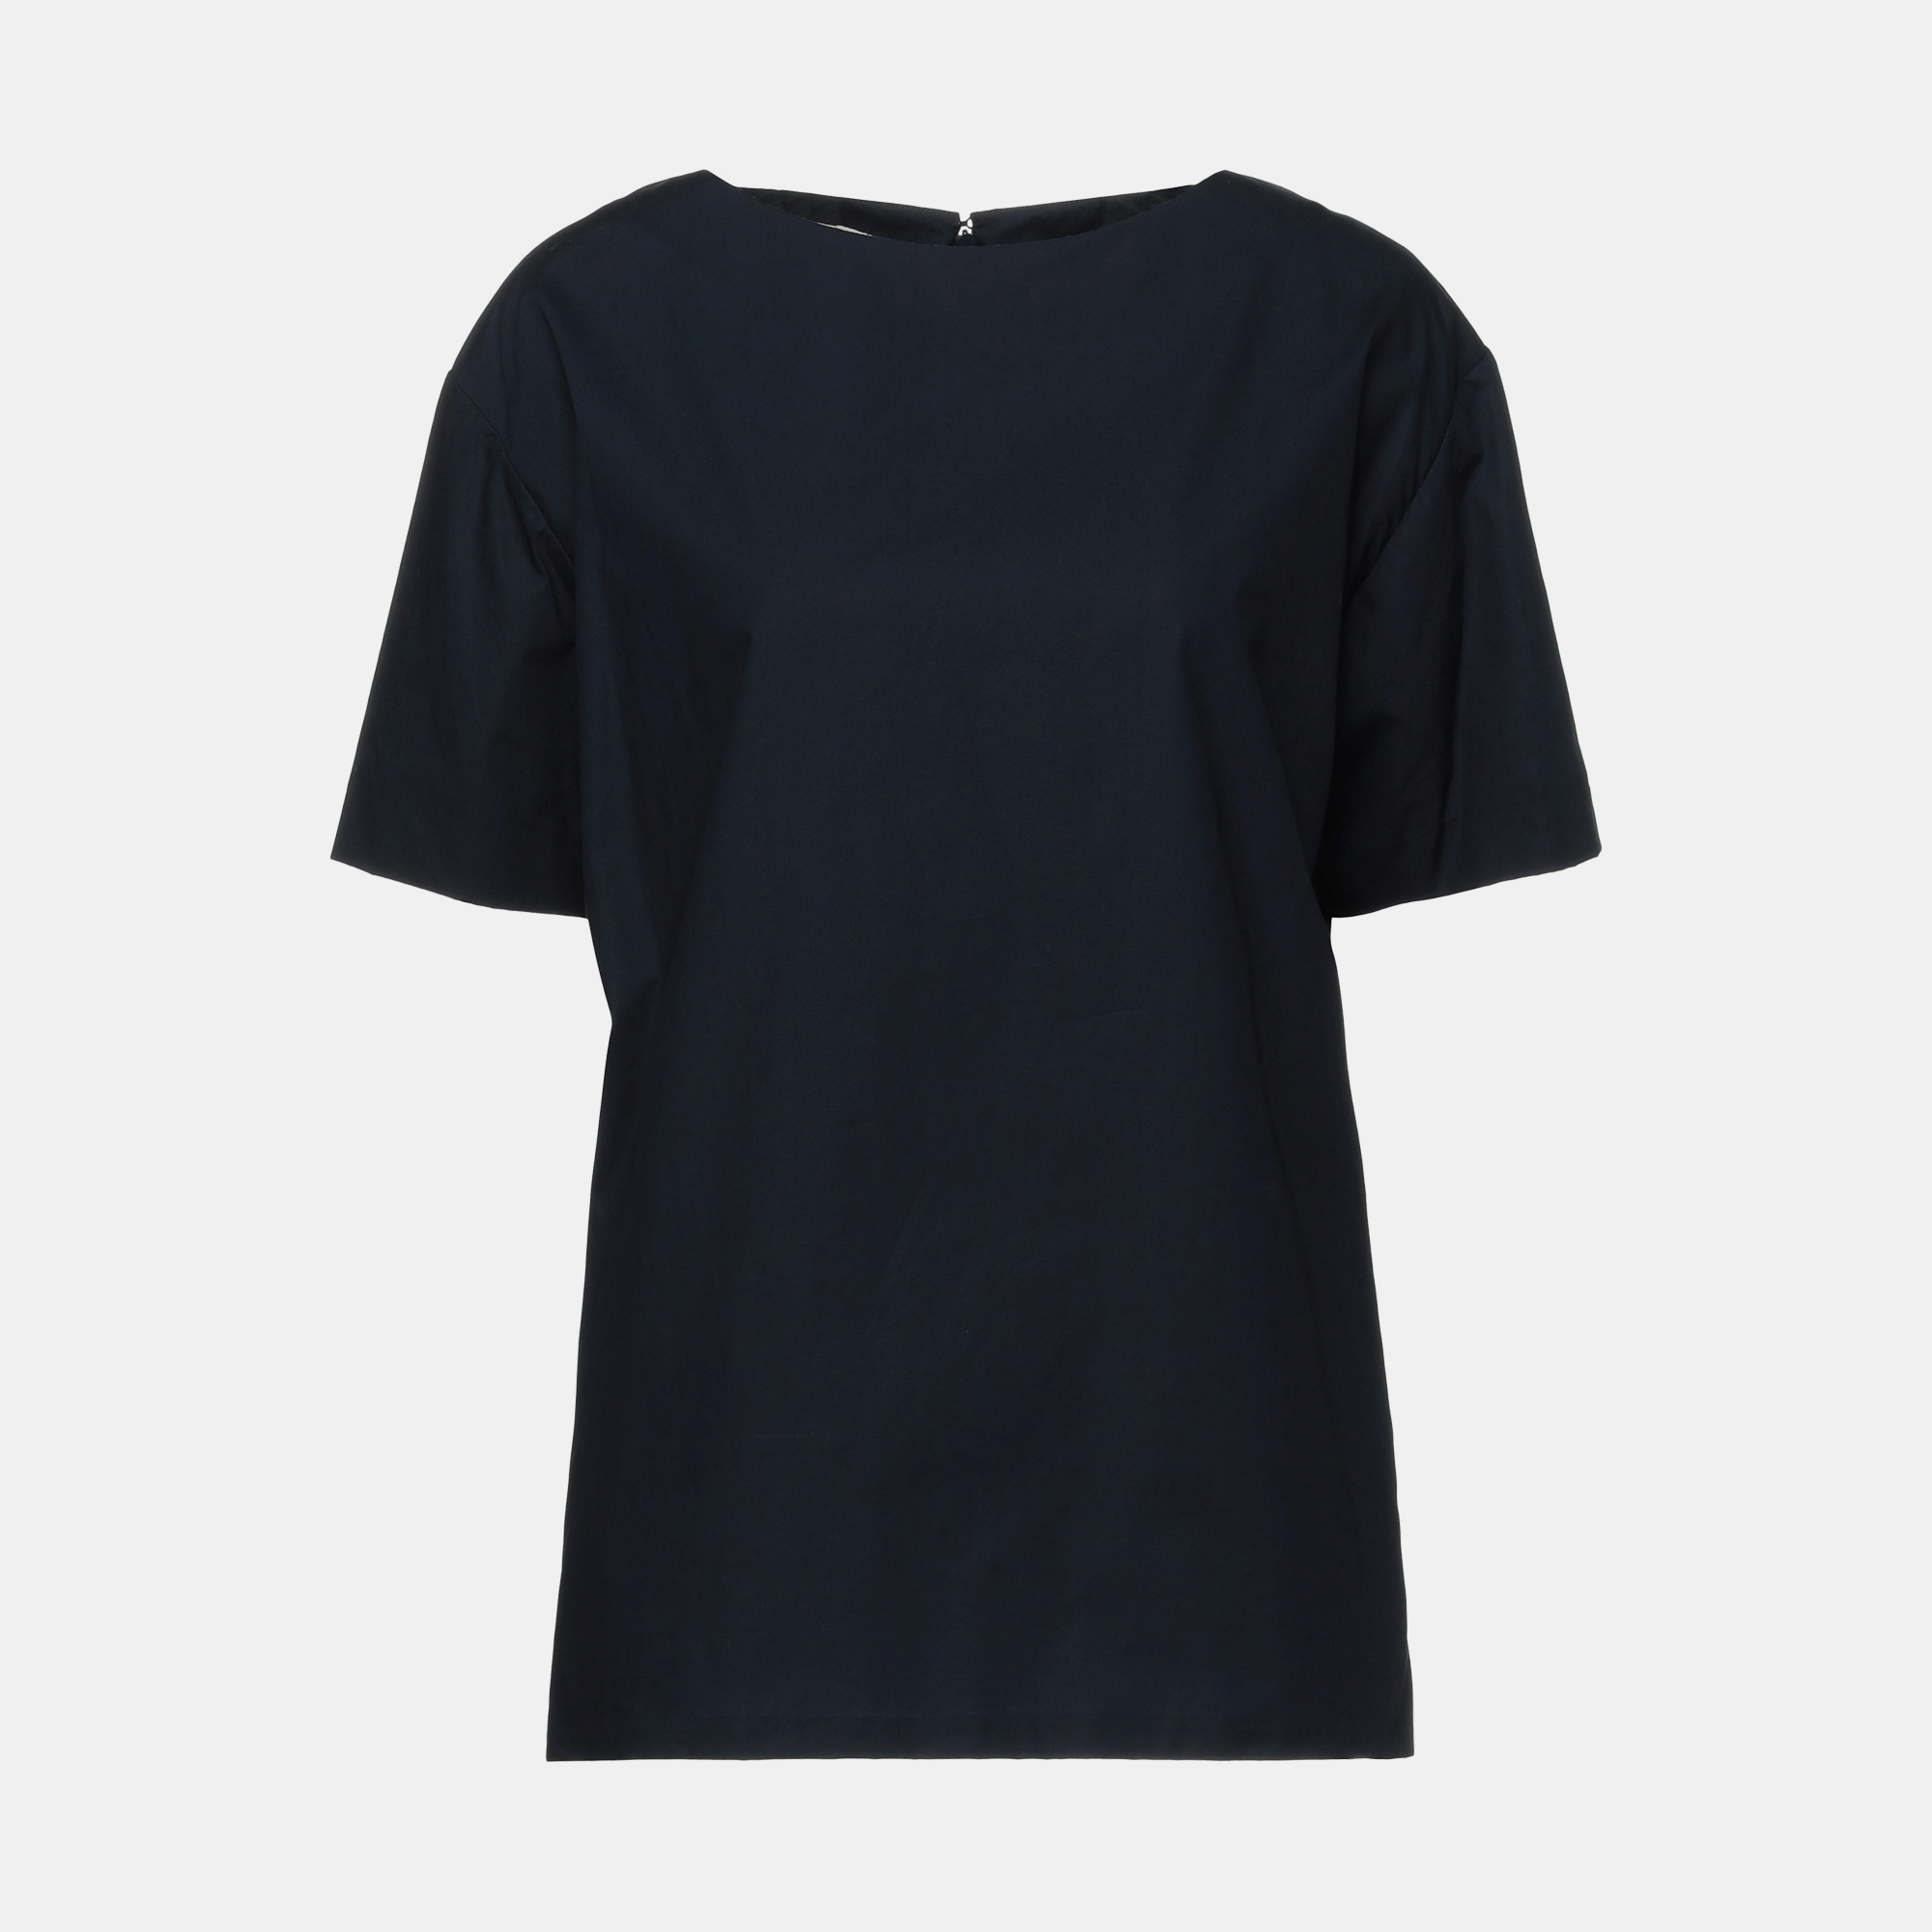 Marni navy blue cotton short sleeve top s (it 40)